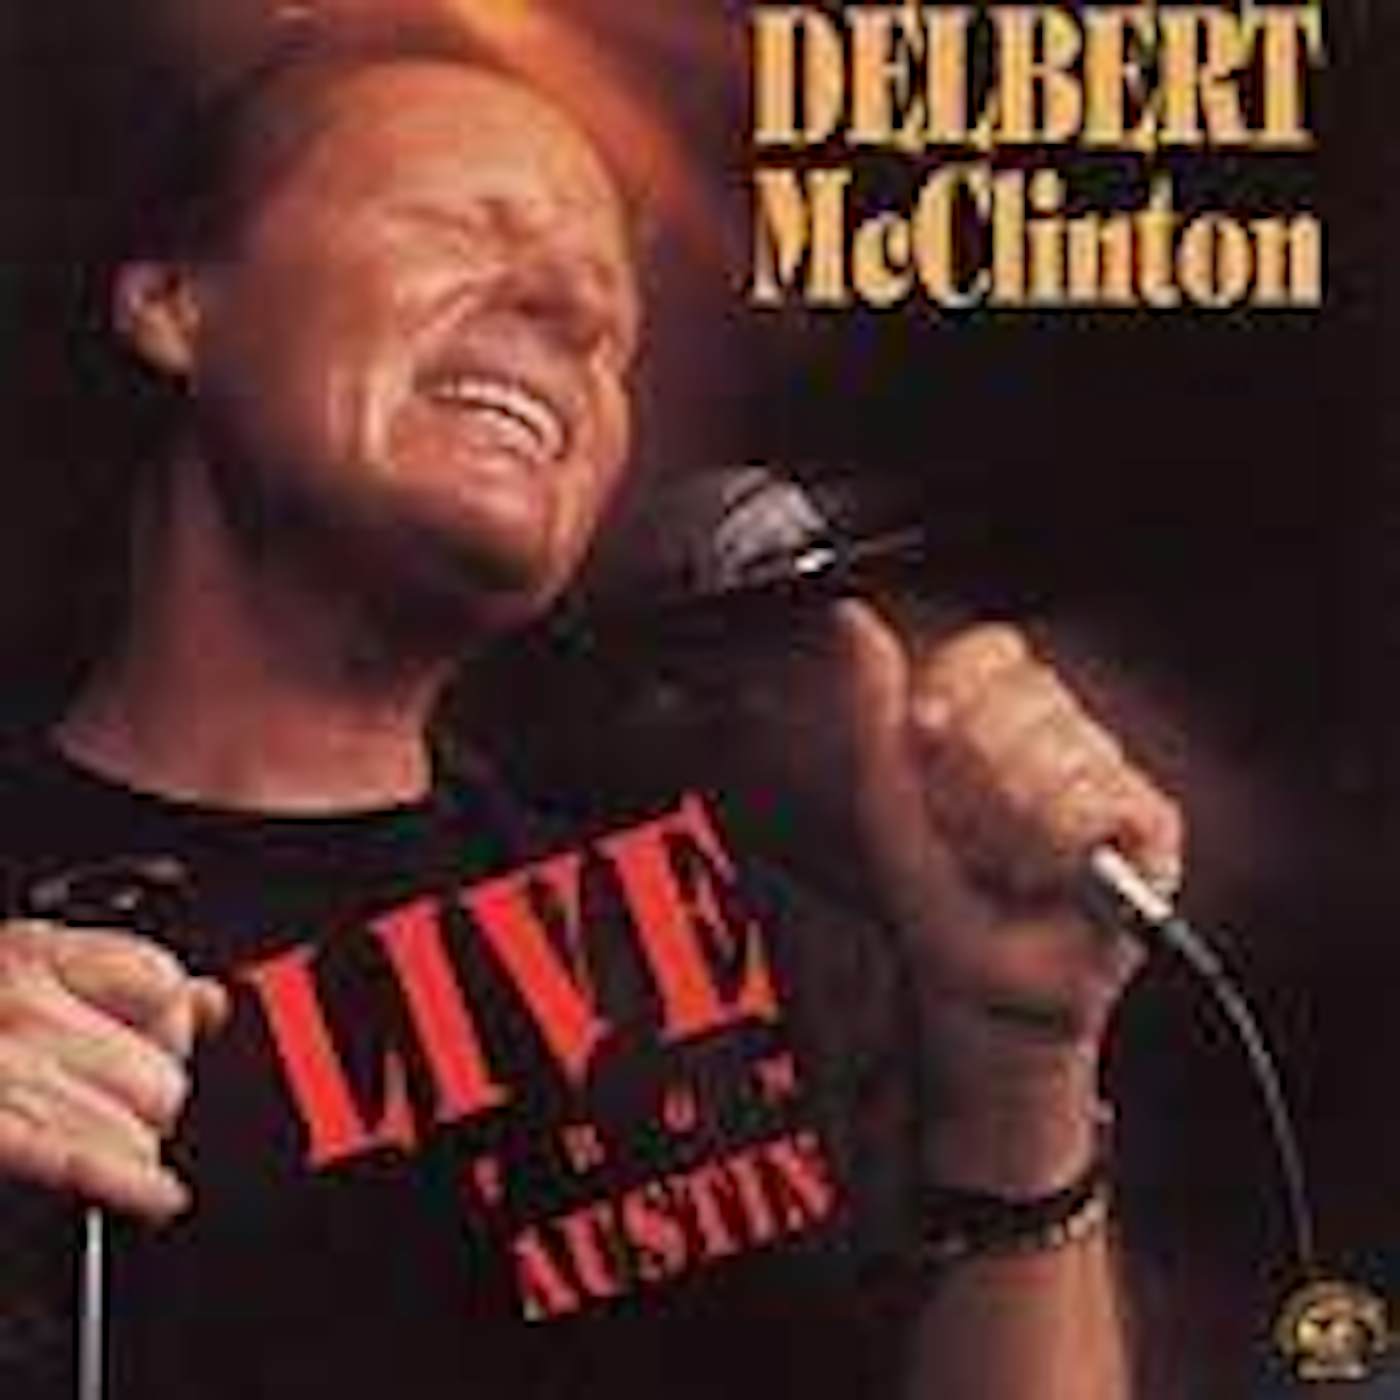 Delbert McClinton LIVE FROM AUSTIN Vinyl Record